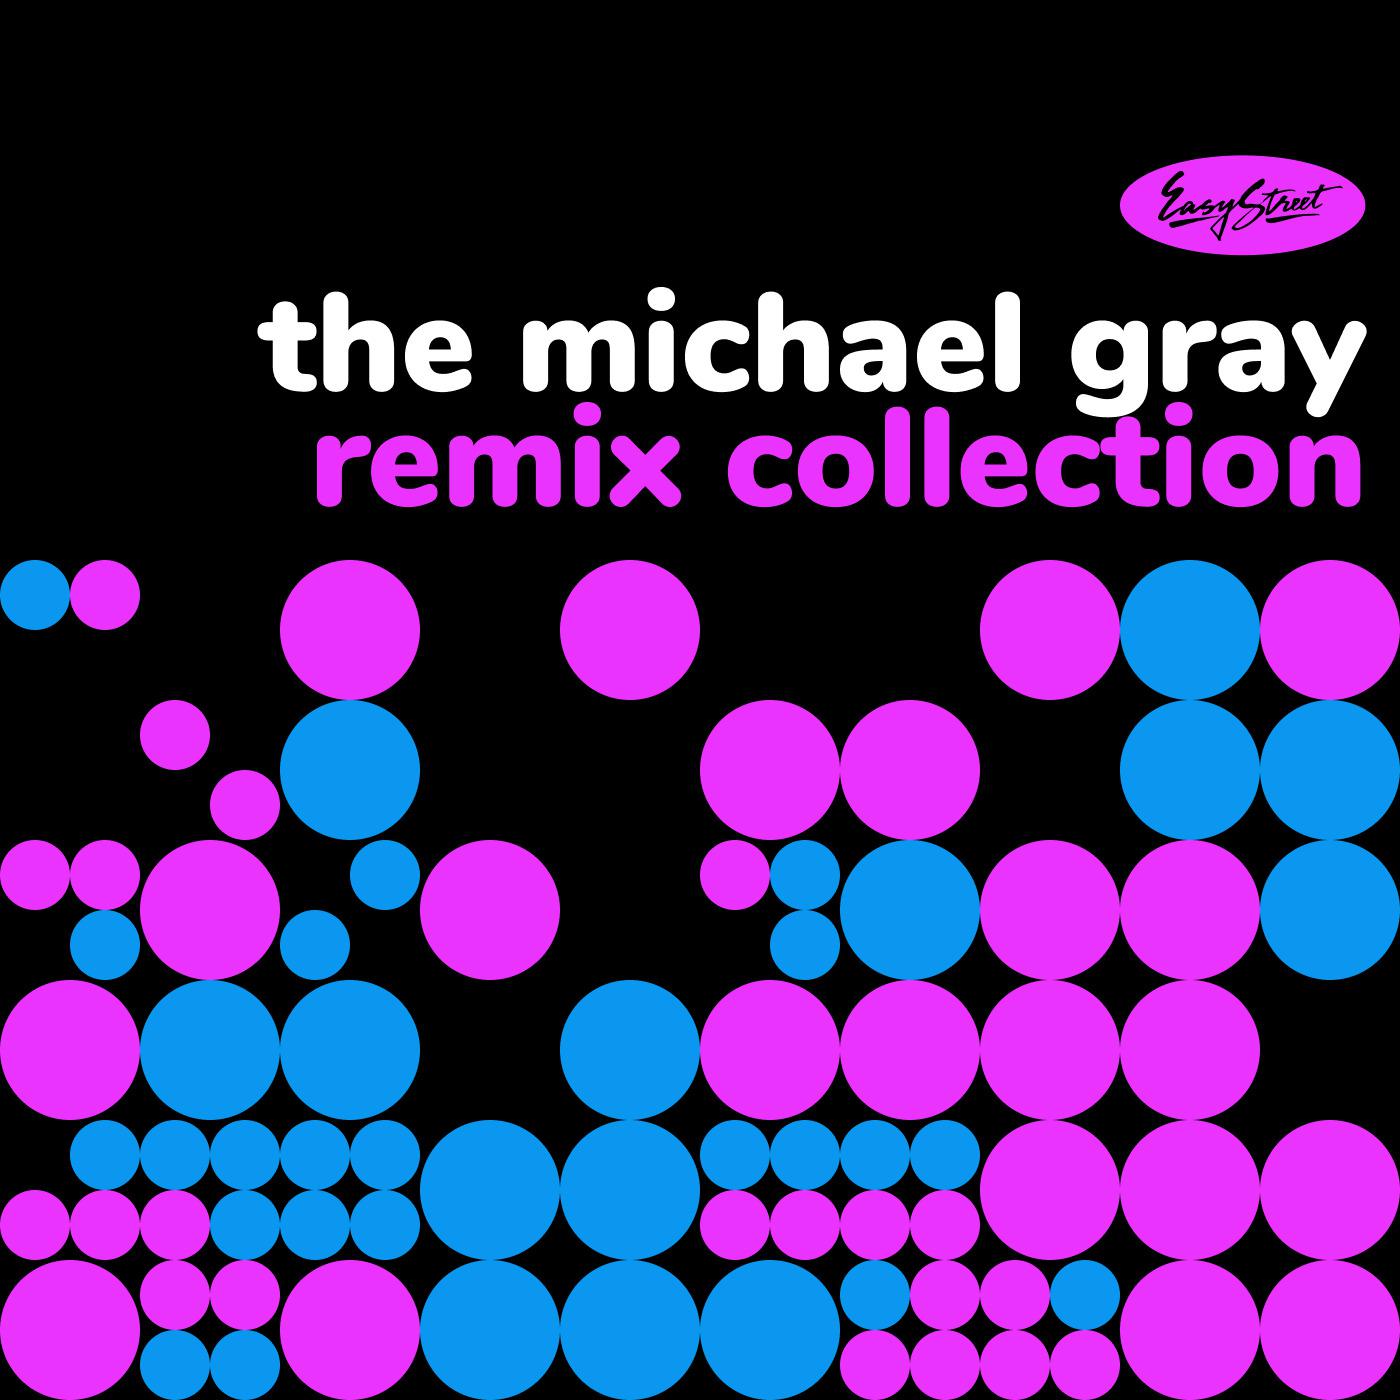 World Premiere - Share The Night (Michael Gray Remix)